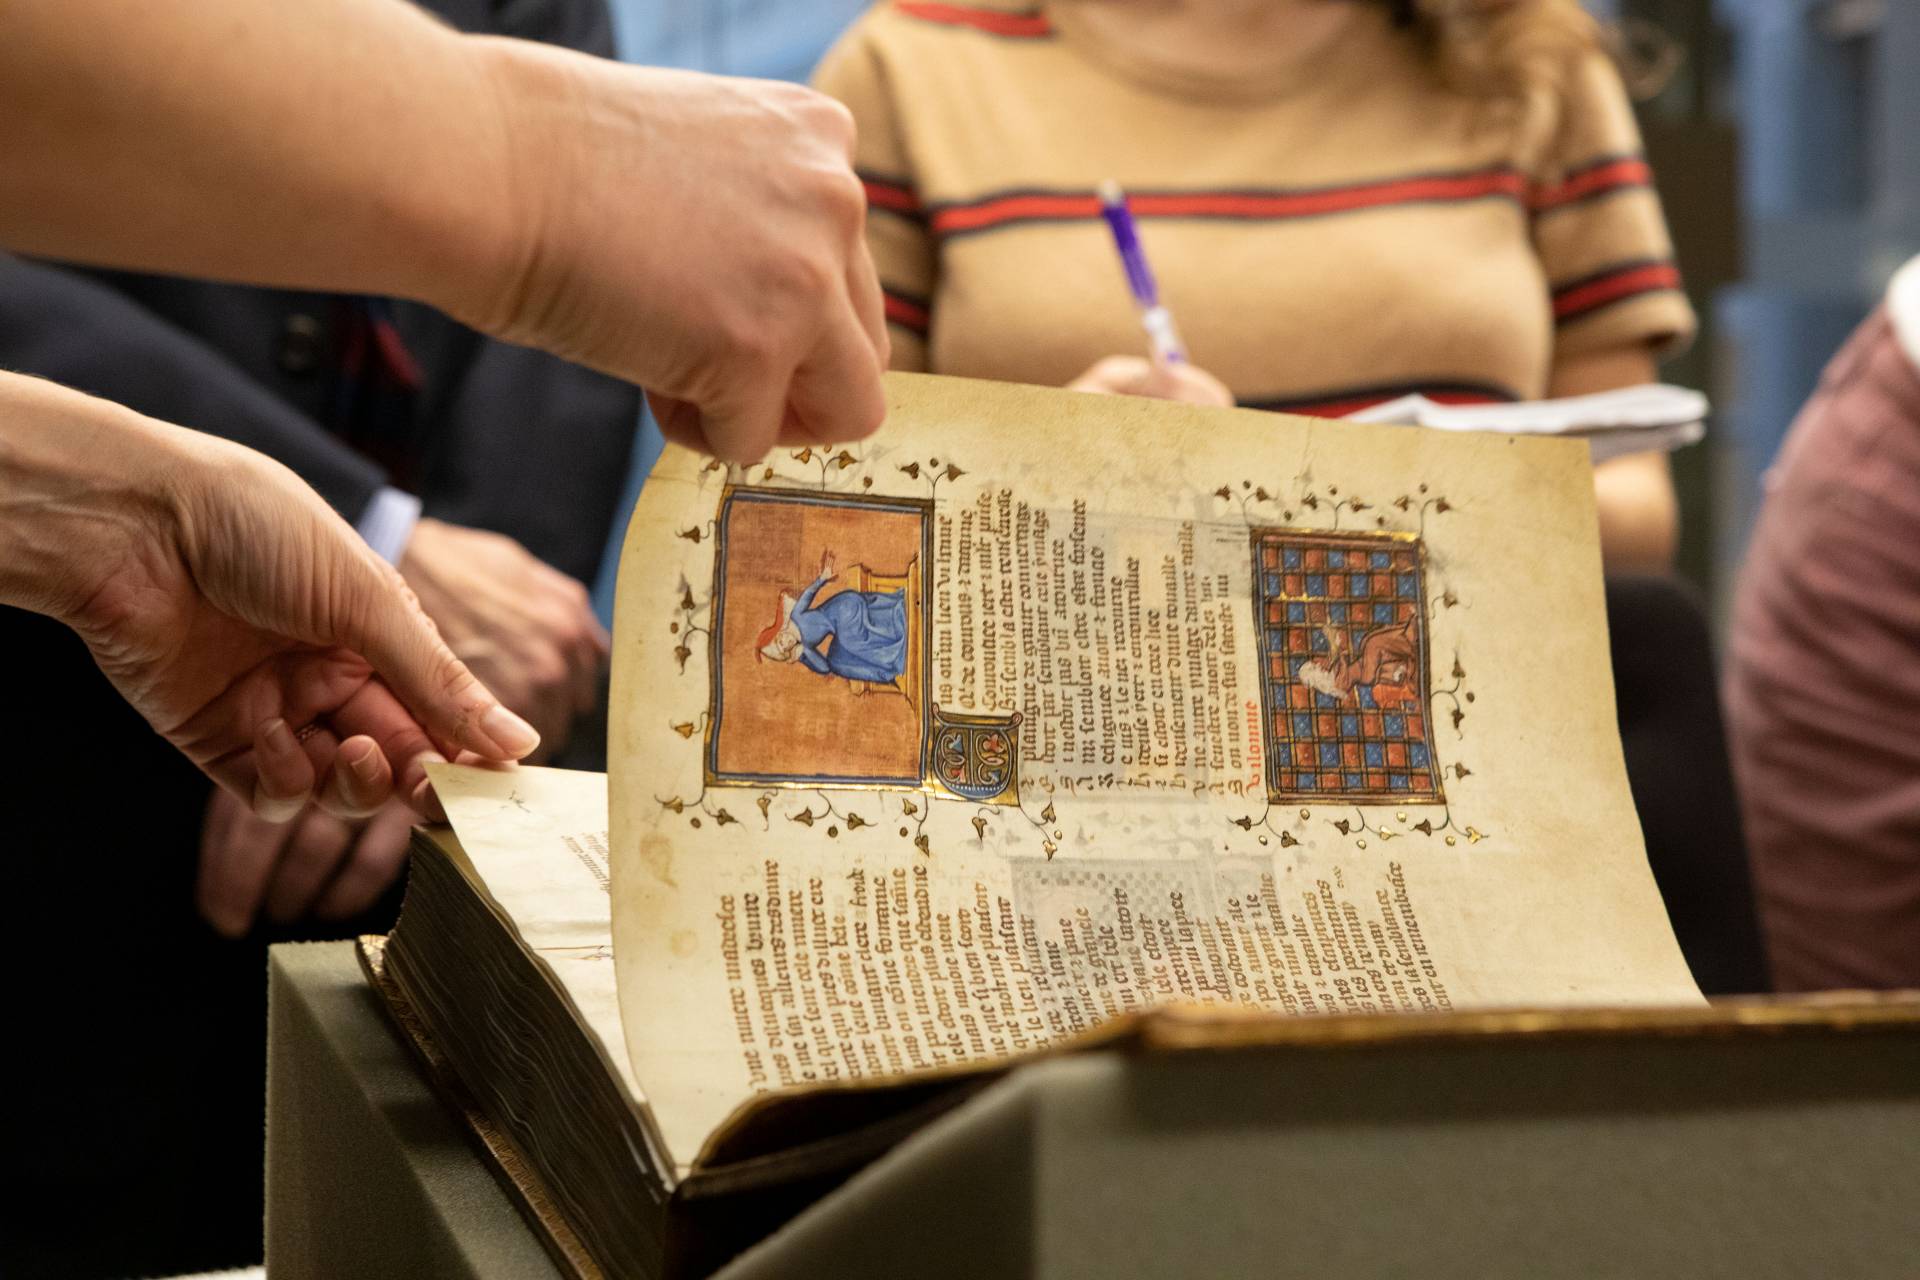 Hand turning page of ancient illuminated manuscript